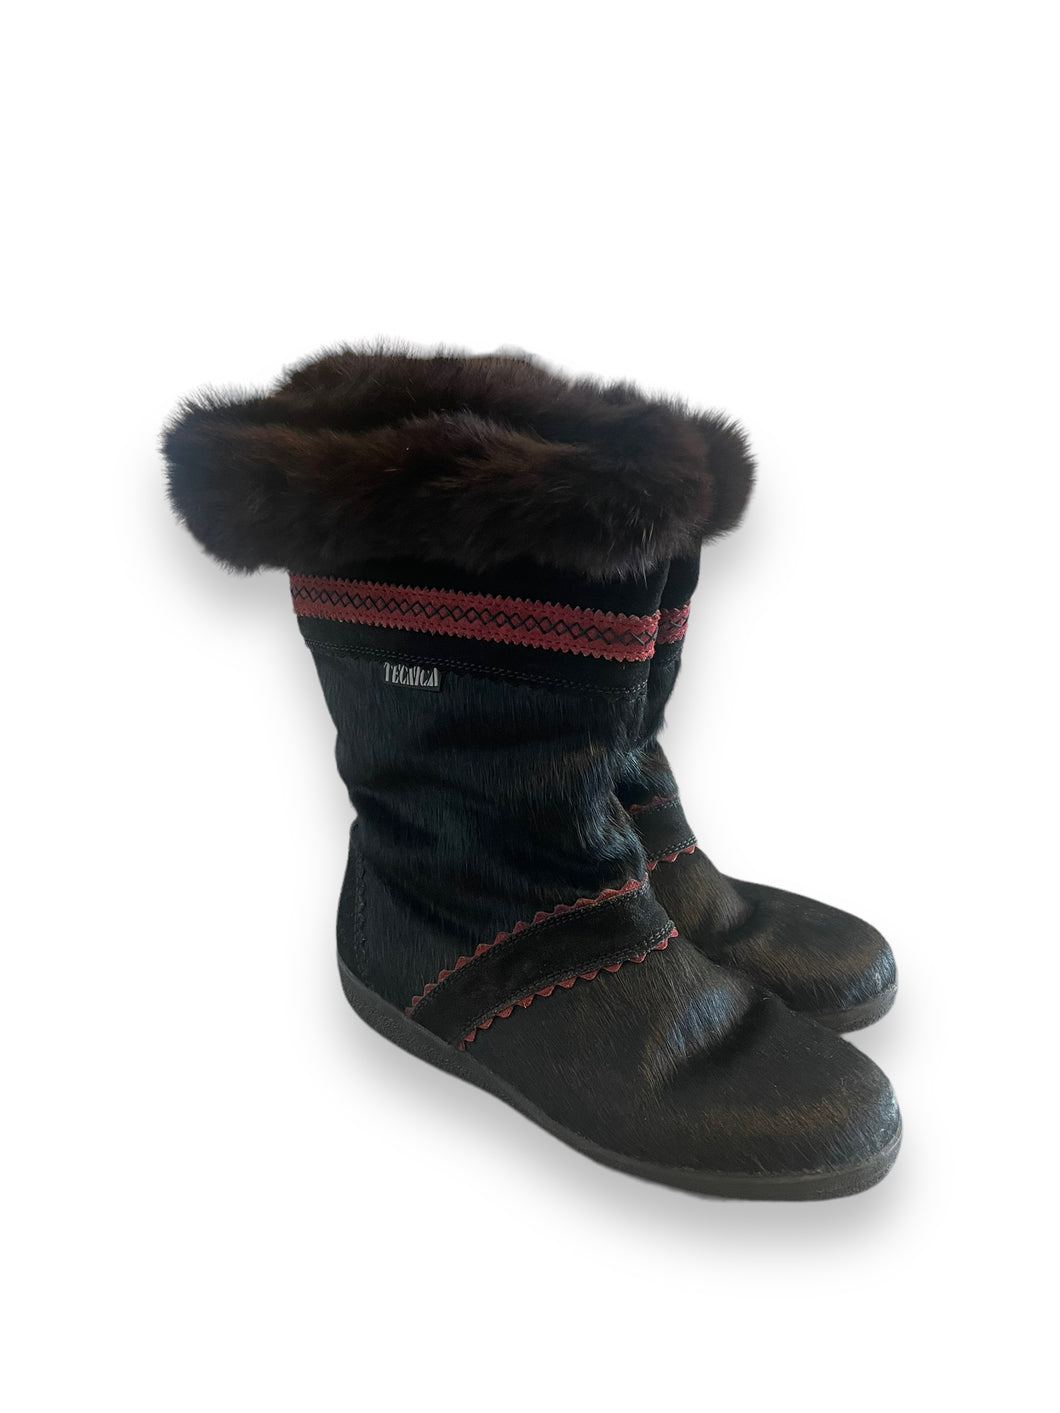 Tecnica Italian vintage fur boots (39)